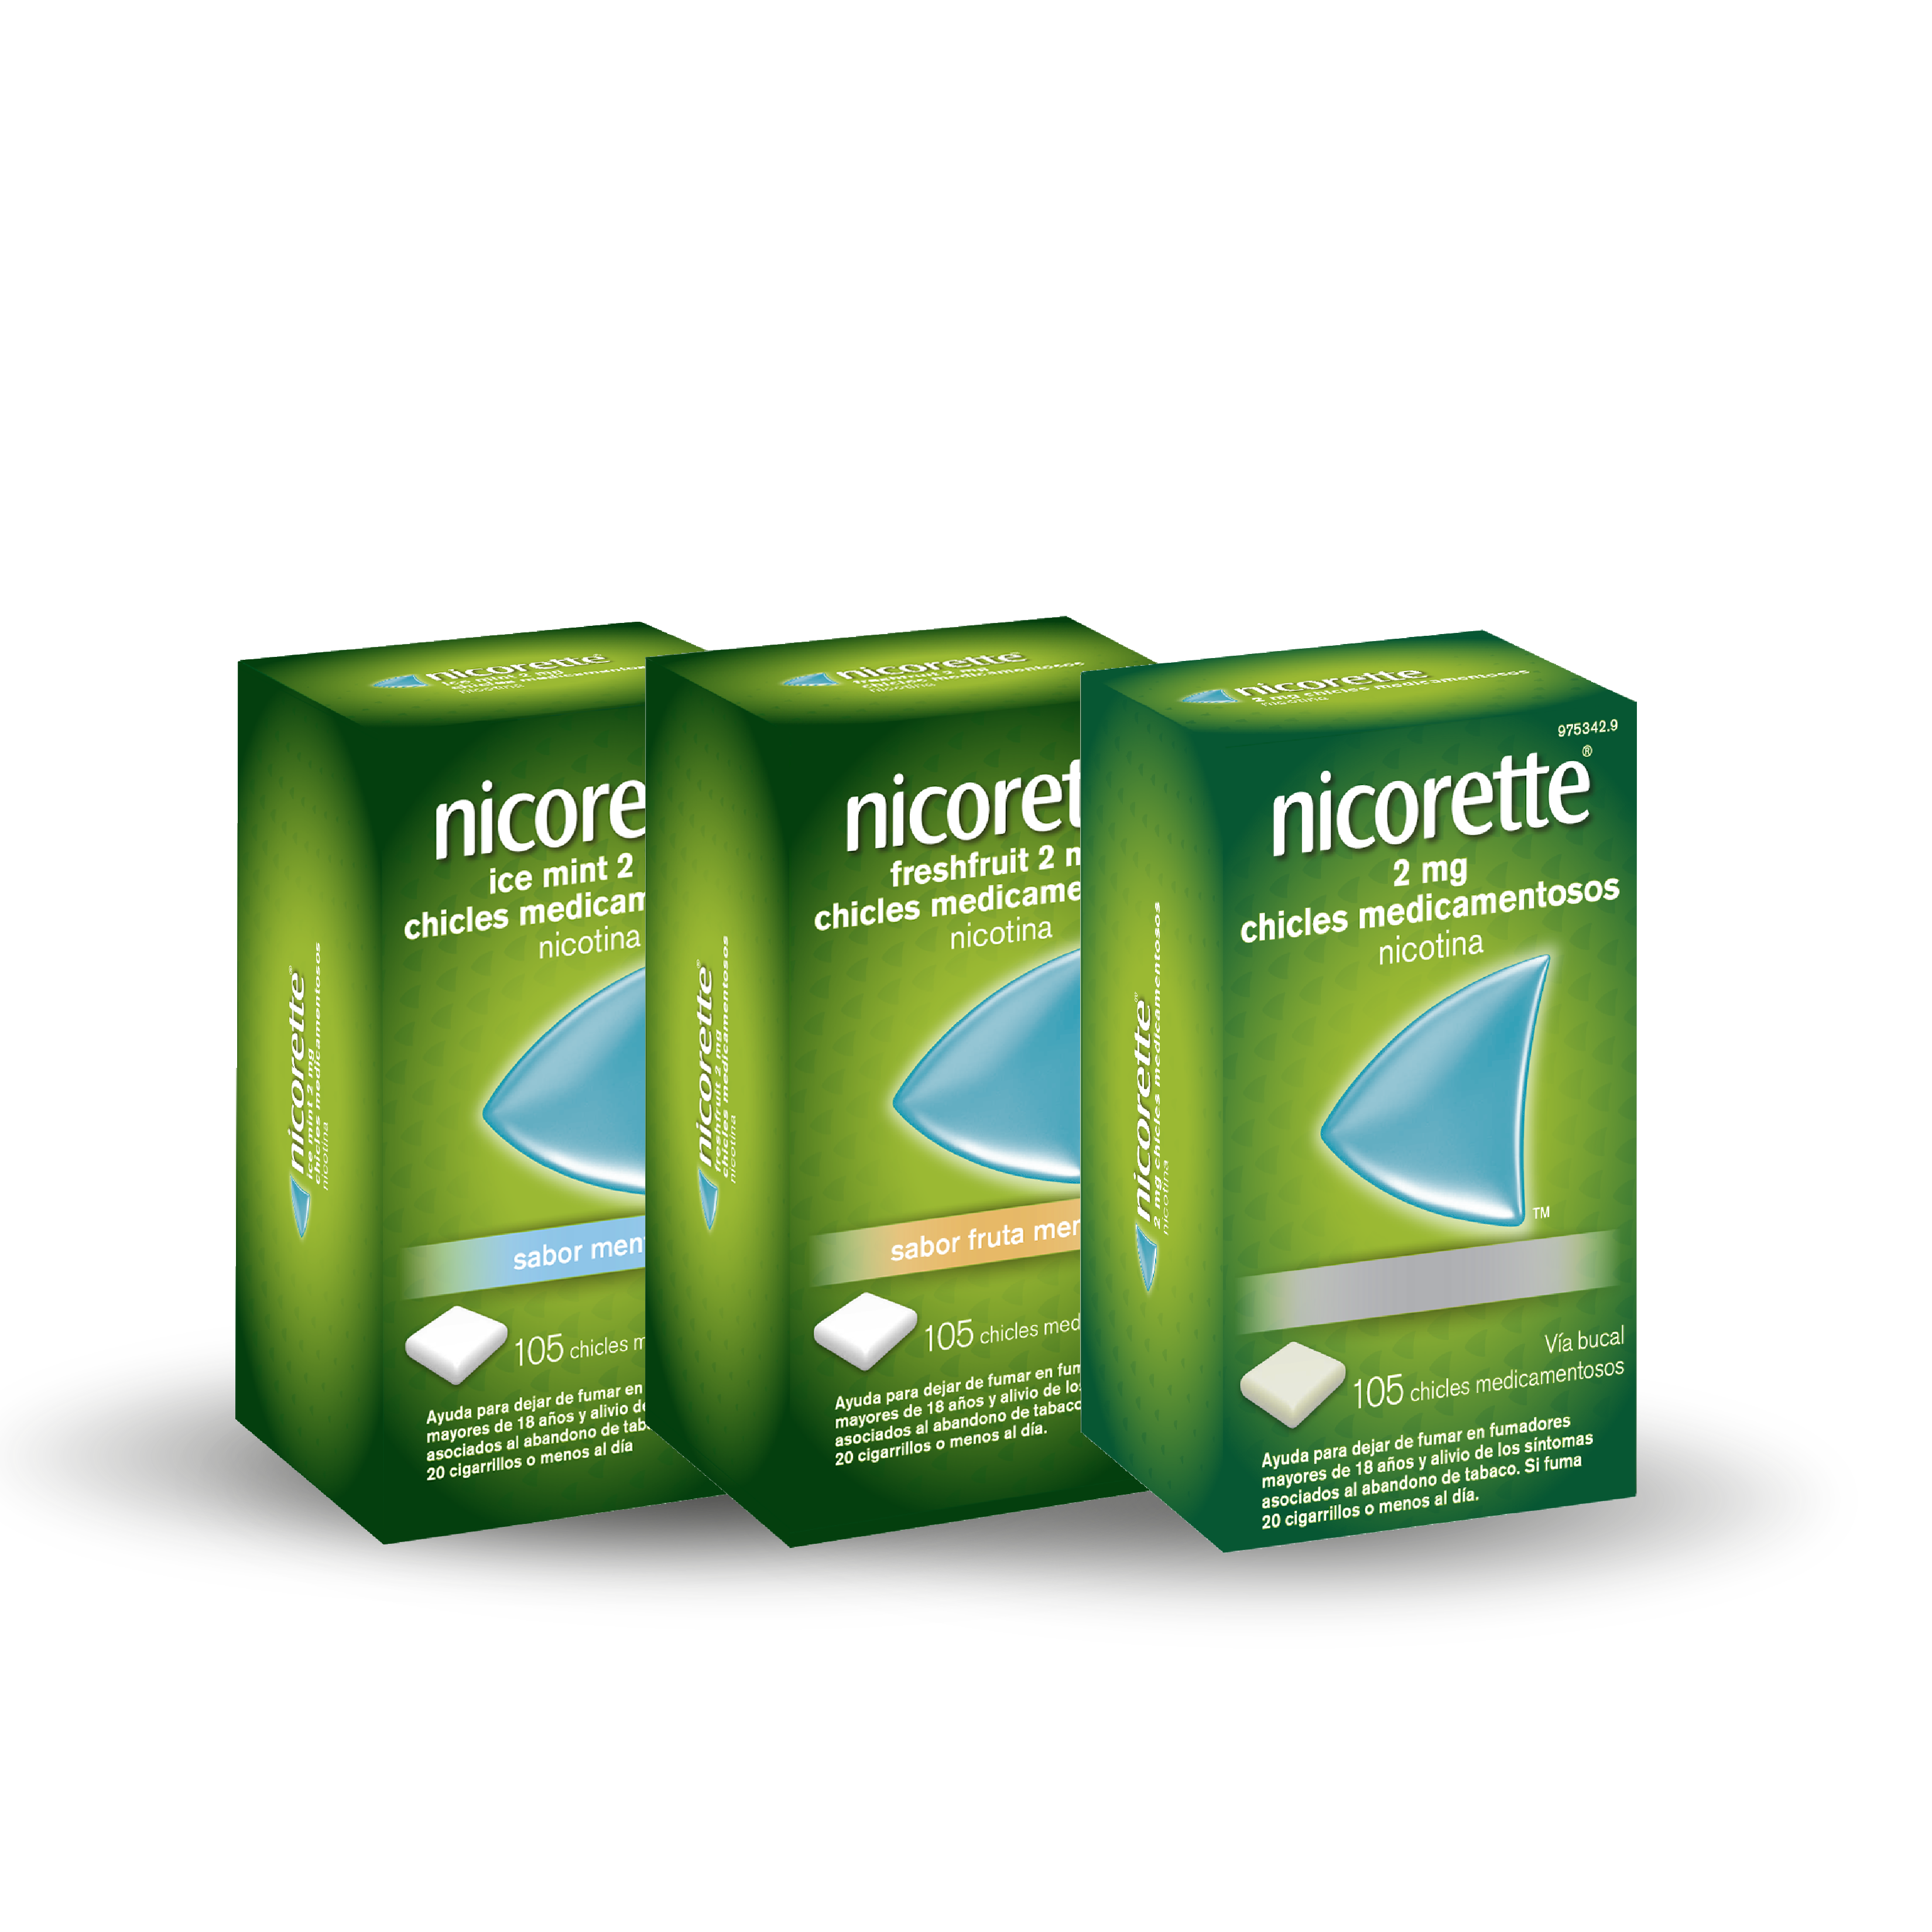 Nicorette 2 mg 210 Chicles Medicamentosos Nicotina